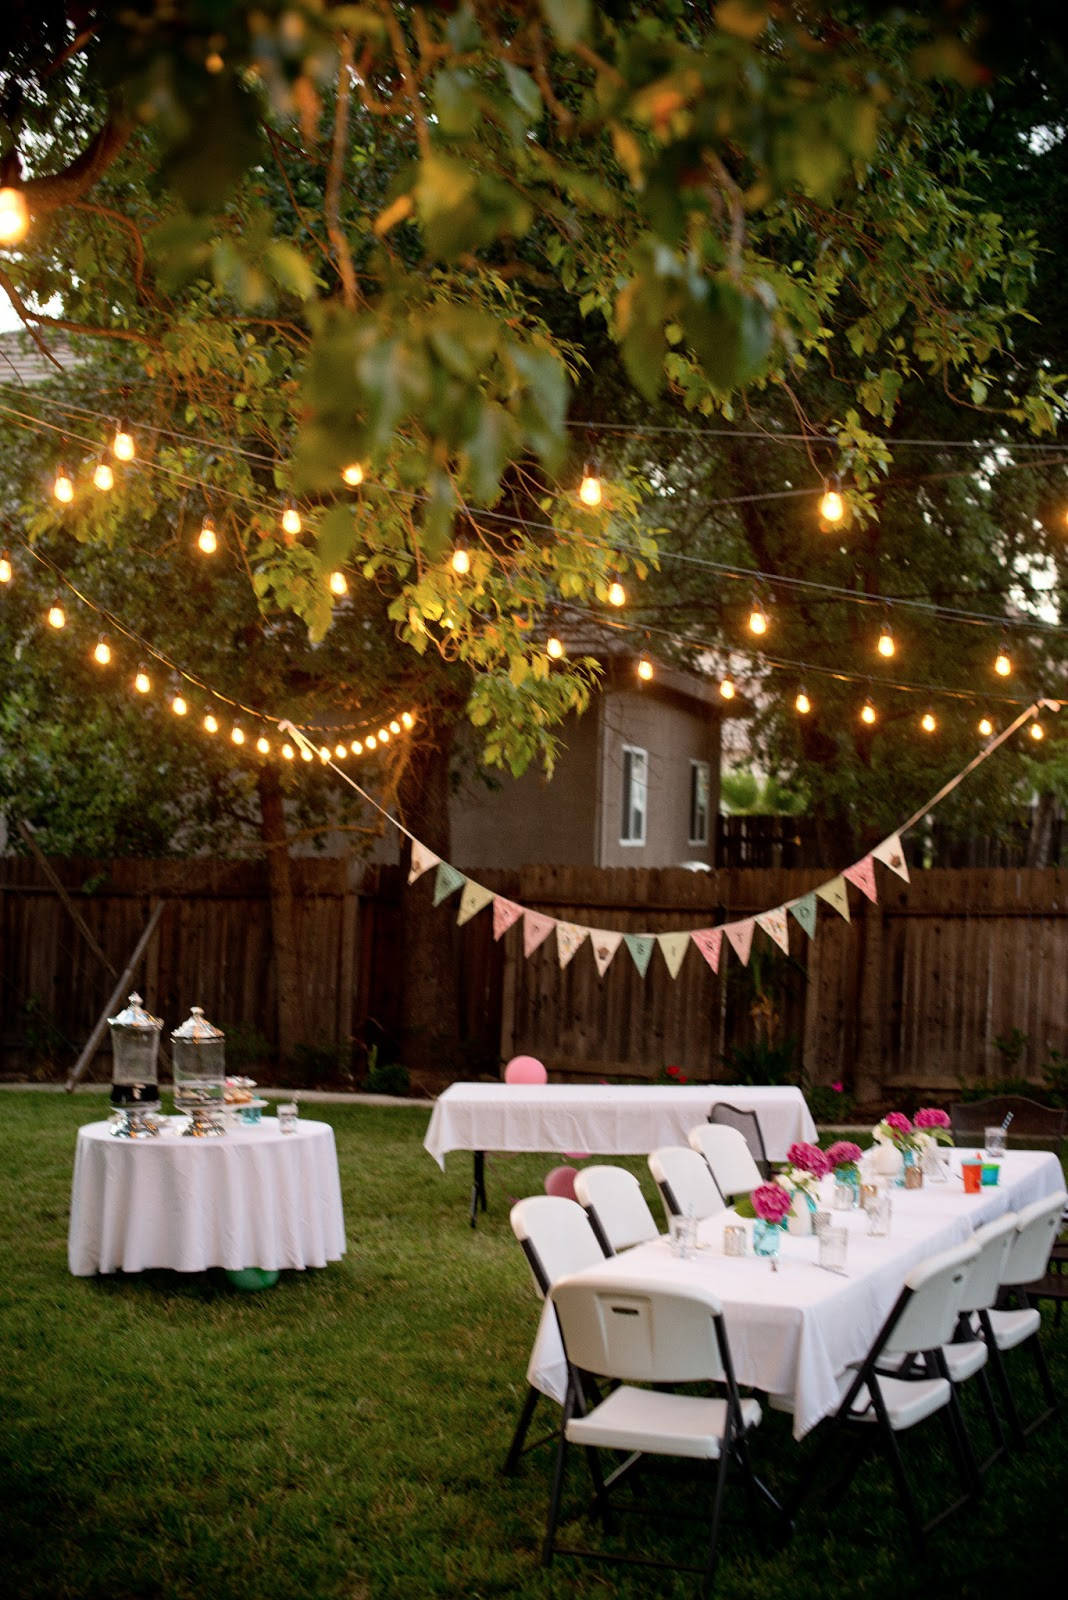 All White Backyard Party Ideas
 Domestic Fashionista Backyard Birthday Fun Pink